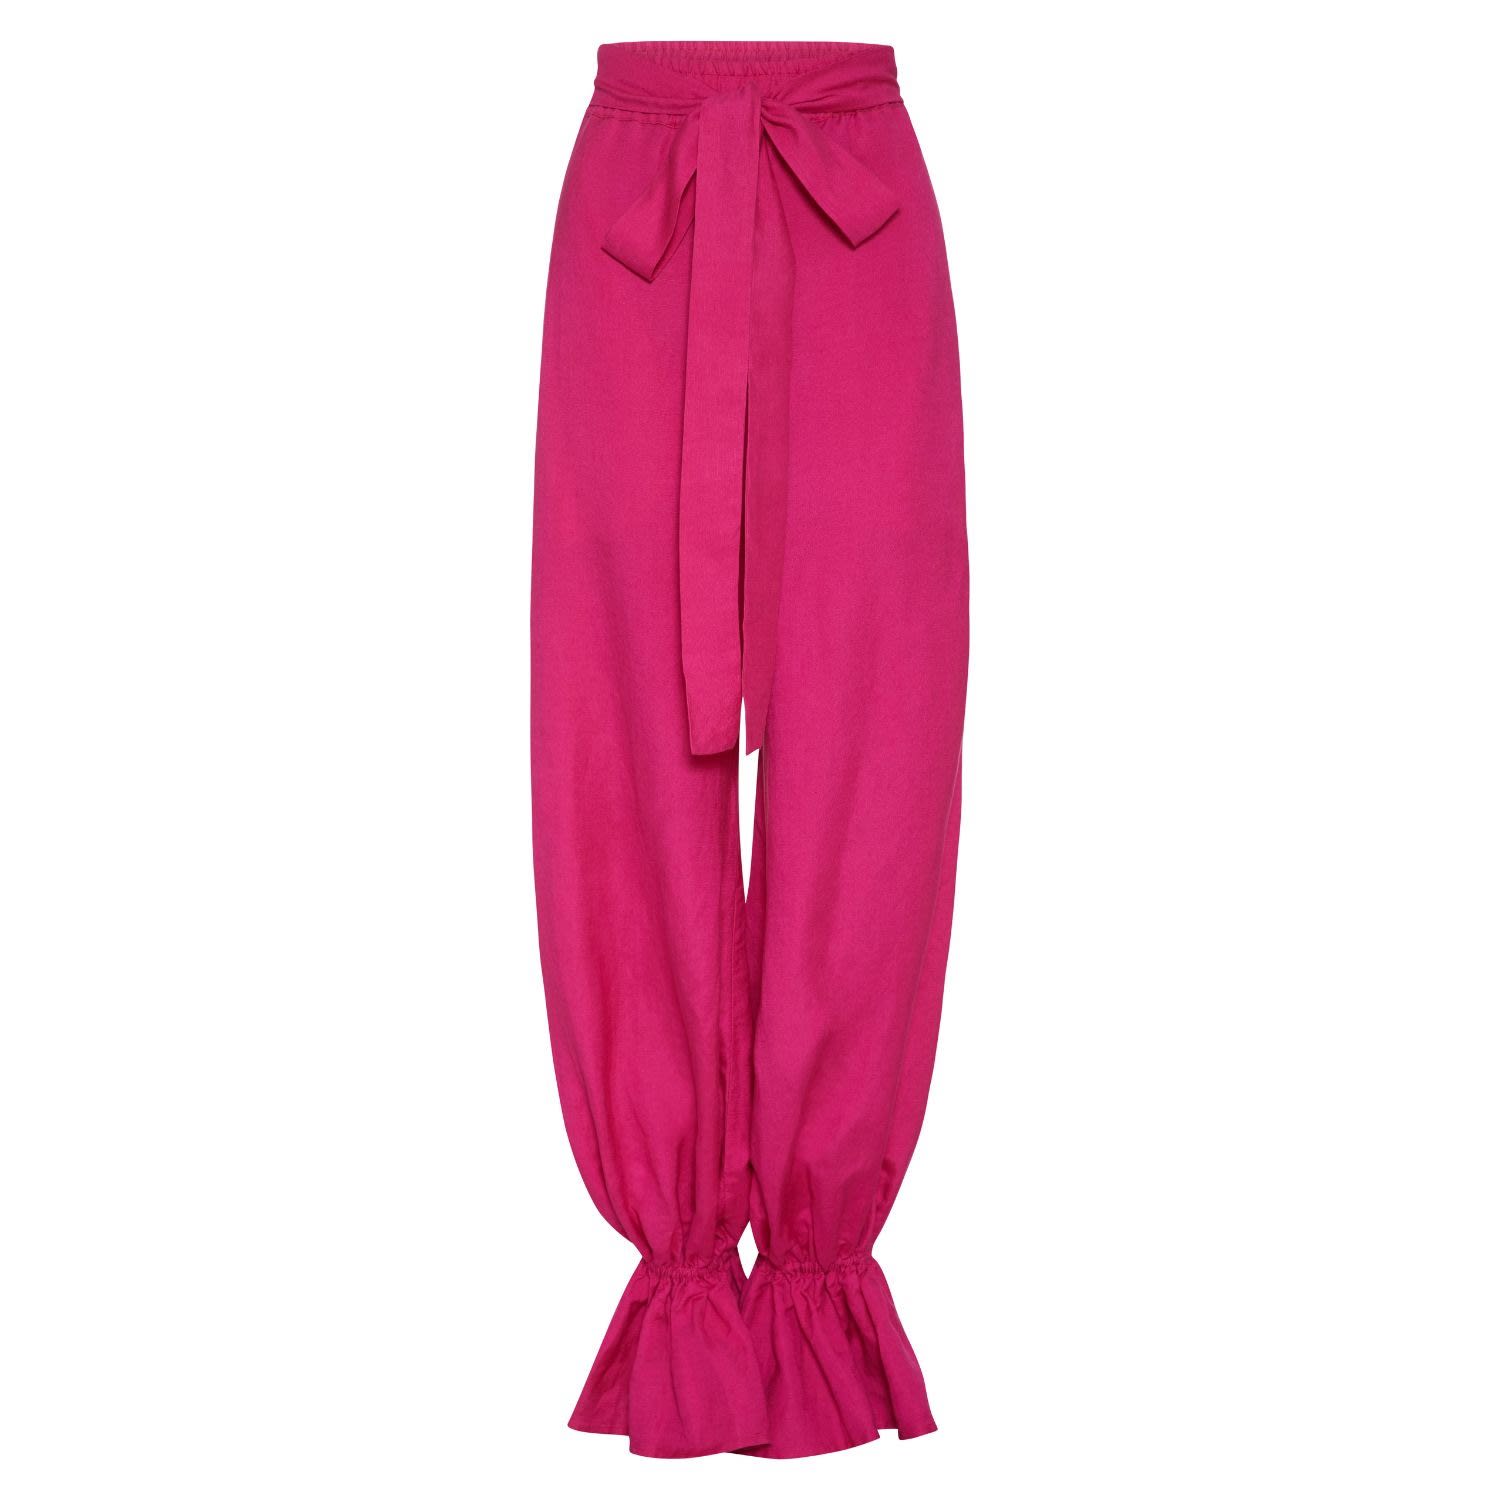 Kahindo Women's Pink / Purple High-waisted Tie-ankle Abusimbel Pants